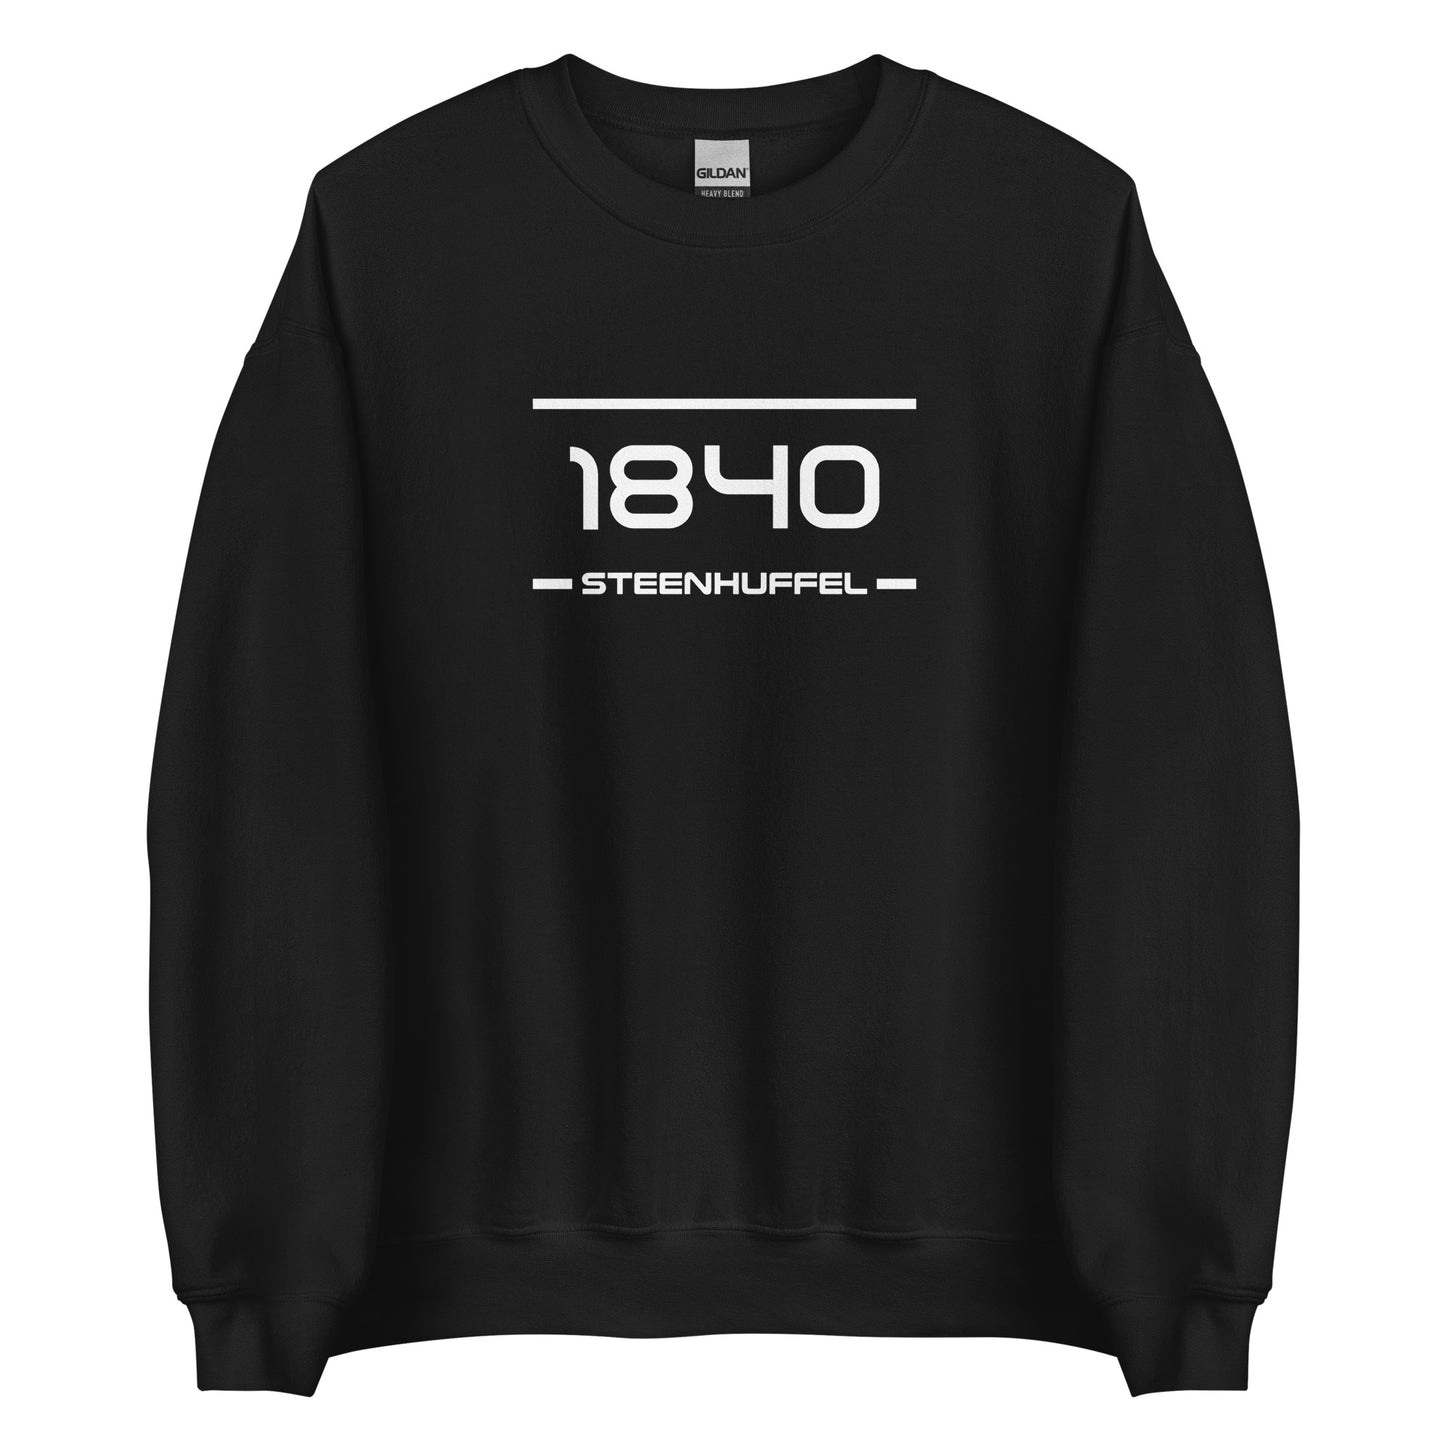 Sweater - 1840 - Steenhuffel (M/V)